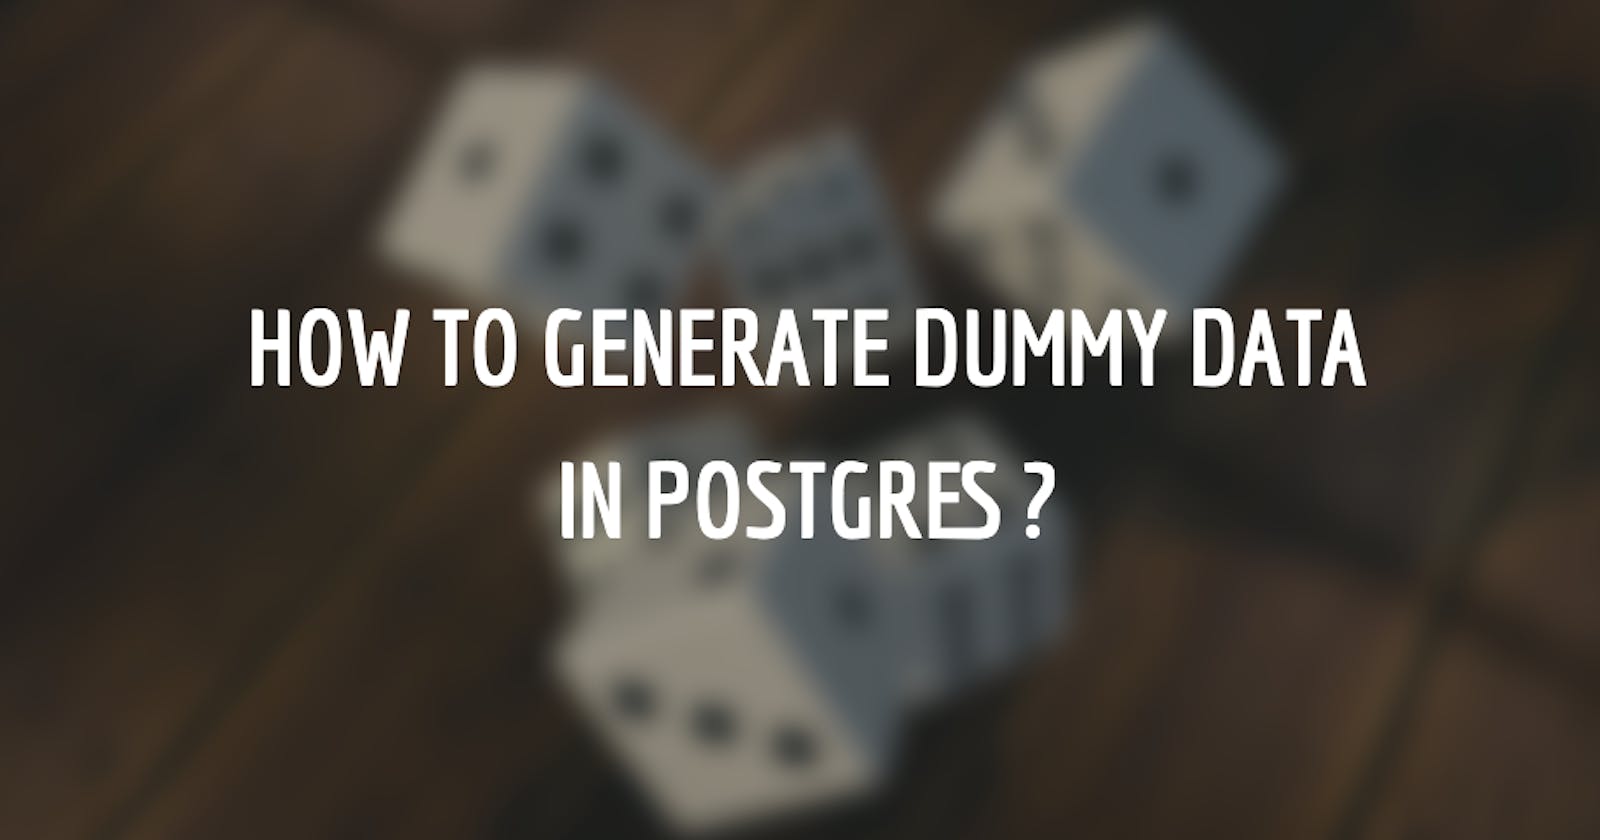 How to generate dummy data in postgres?